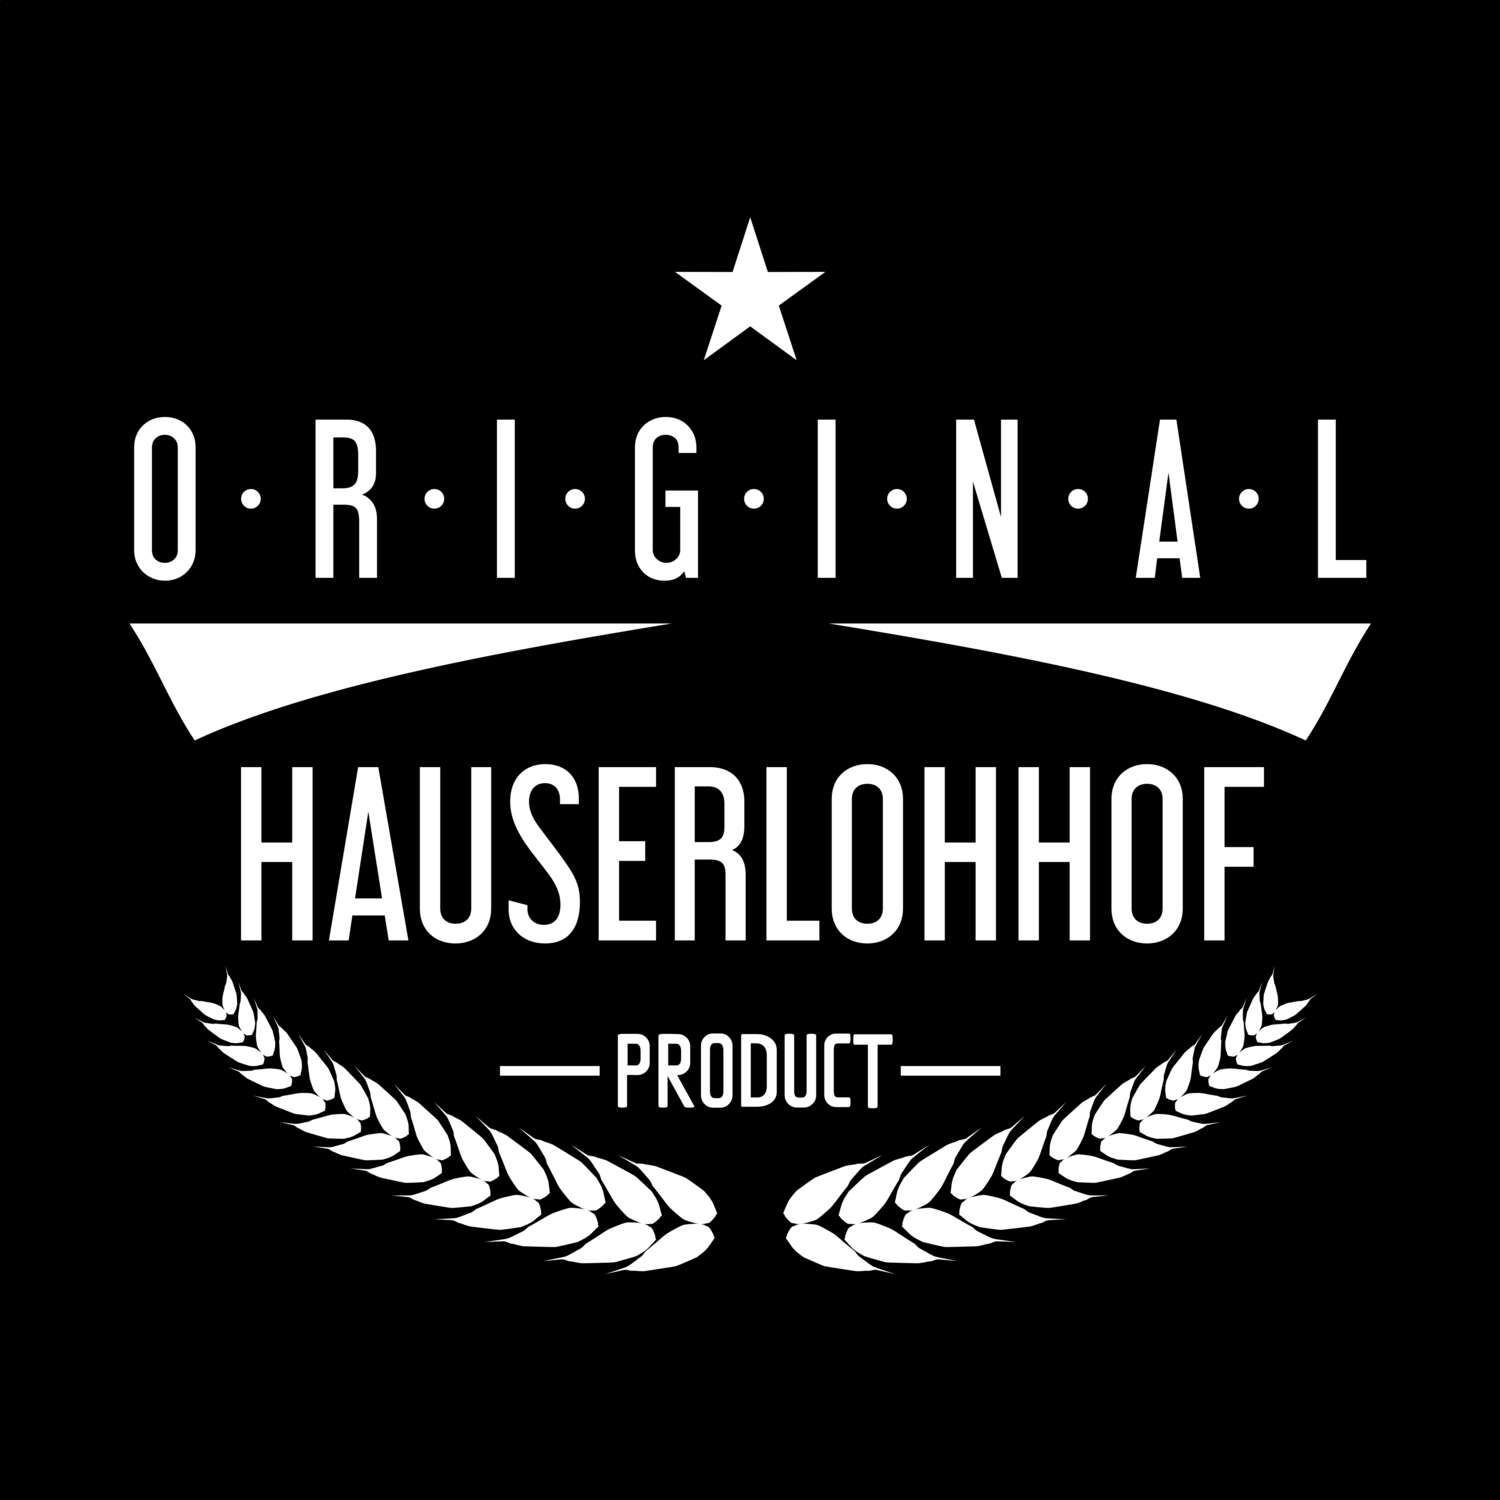 Hauserlohhof T-Shirt »Original Product«